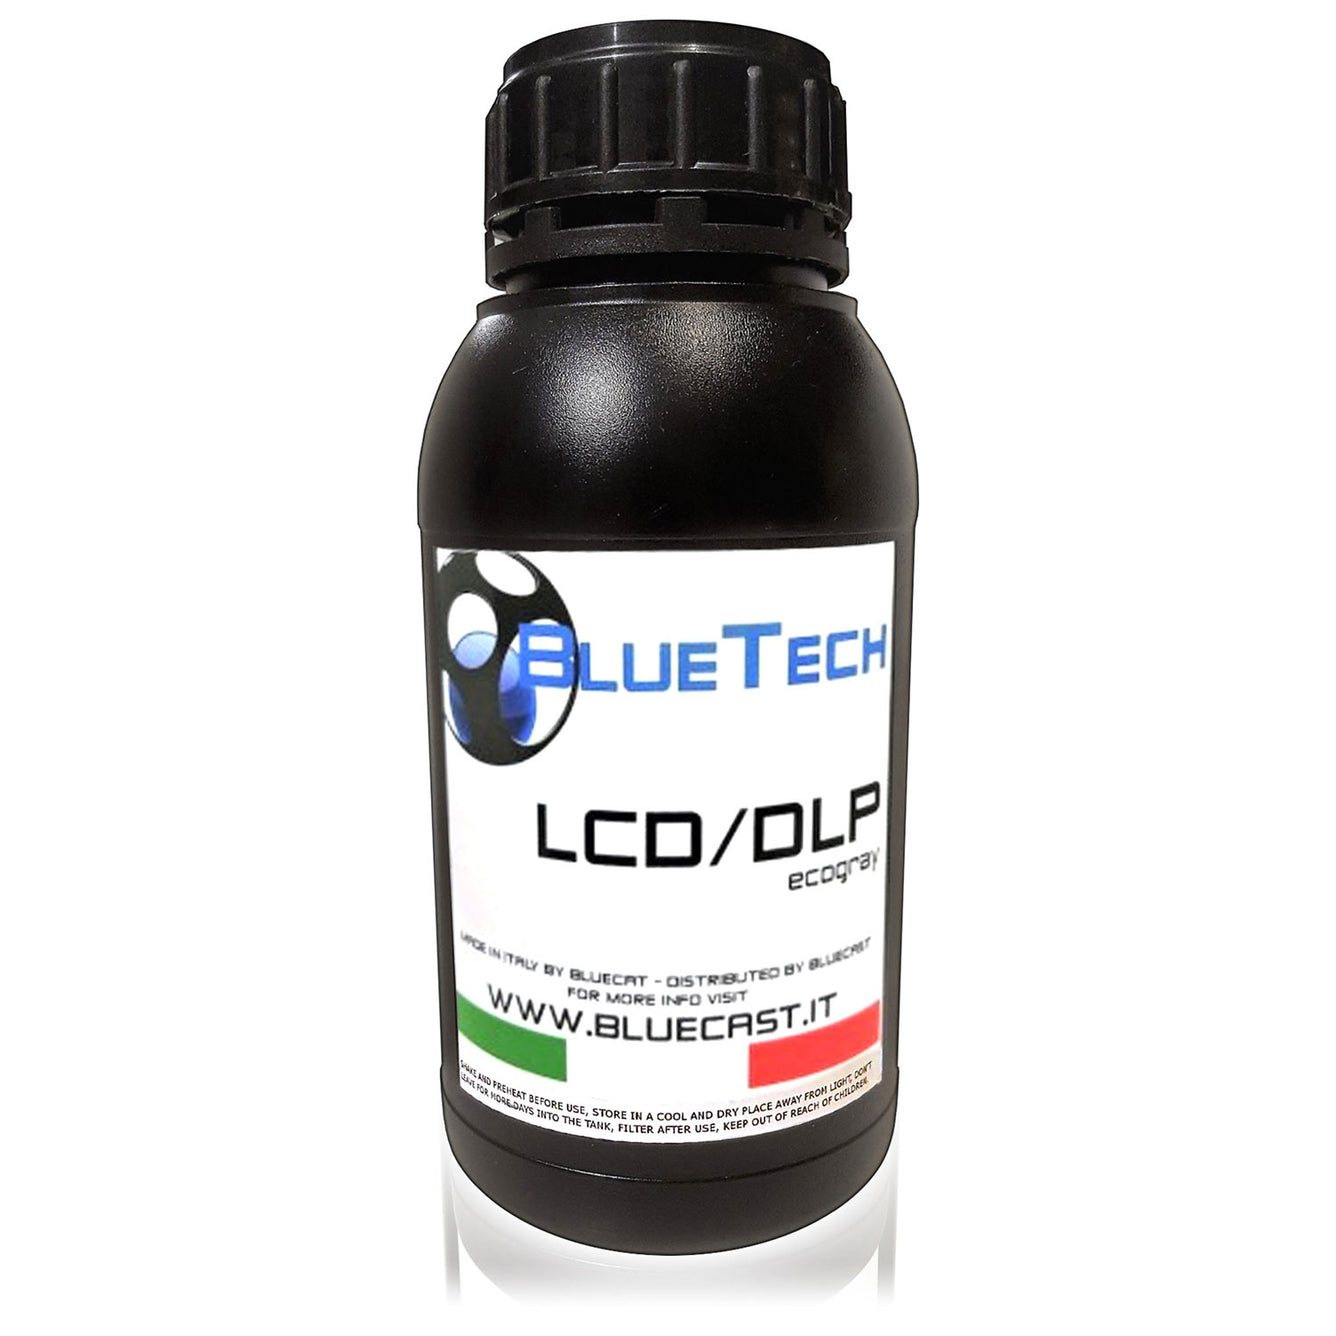 BlueCast EcoGray LCD/DLP Resin